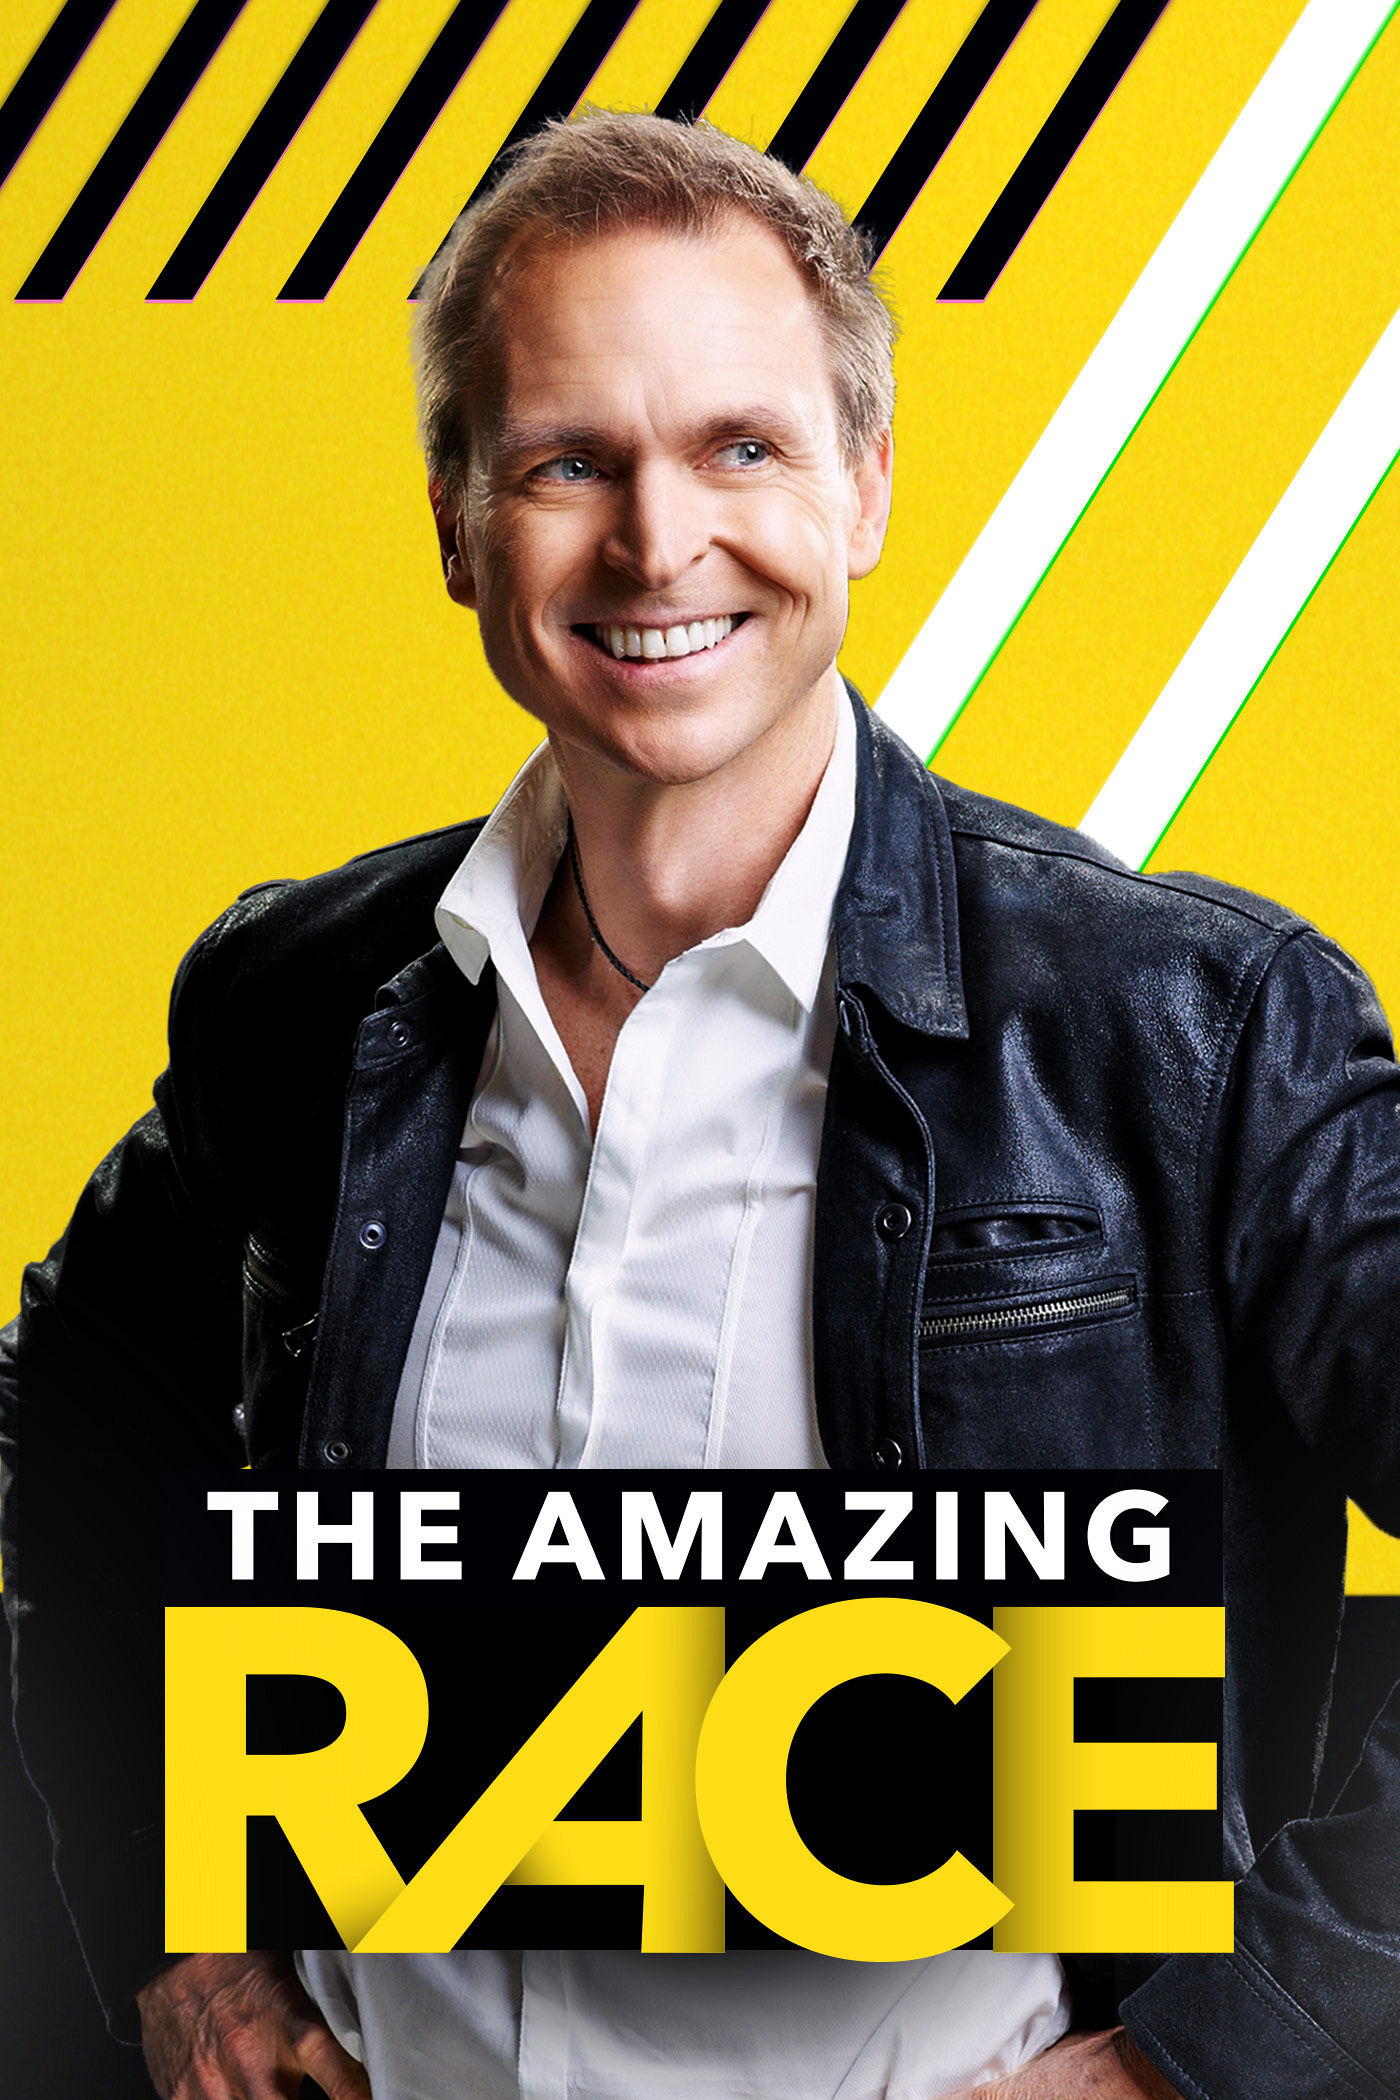 The Amazing Race Next Episode